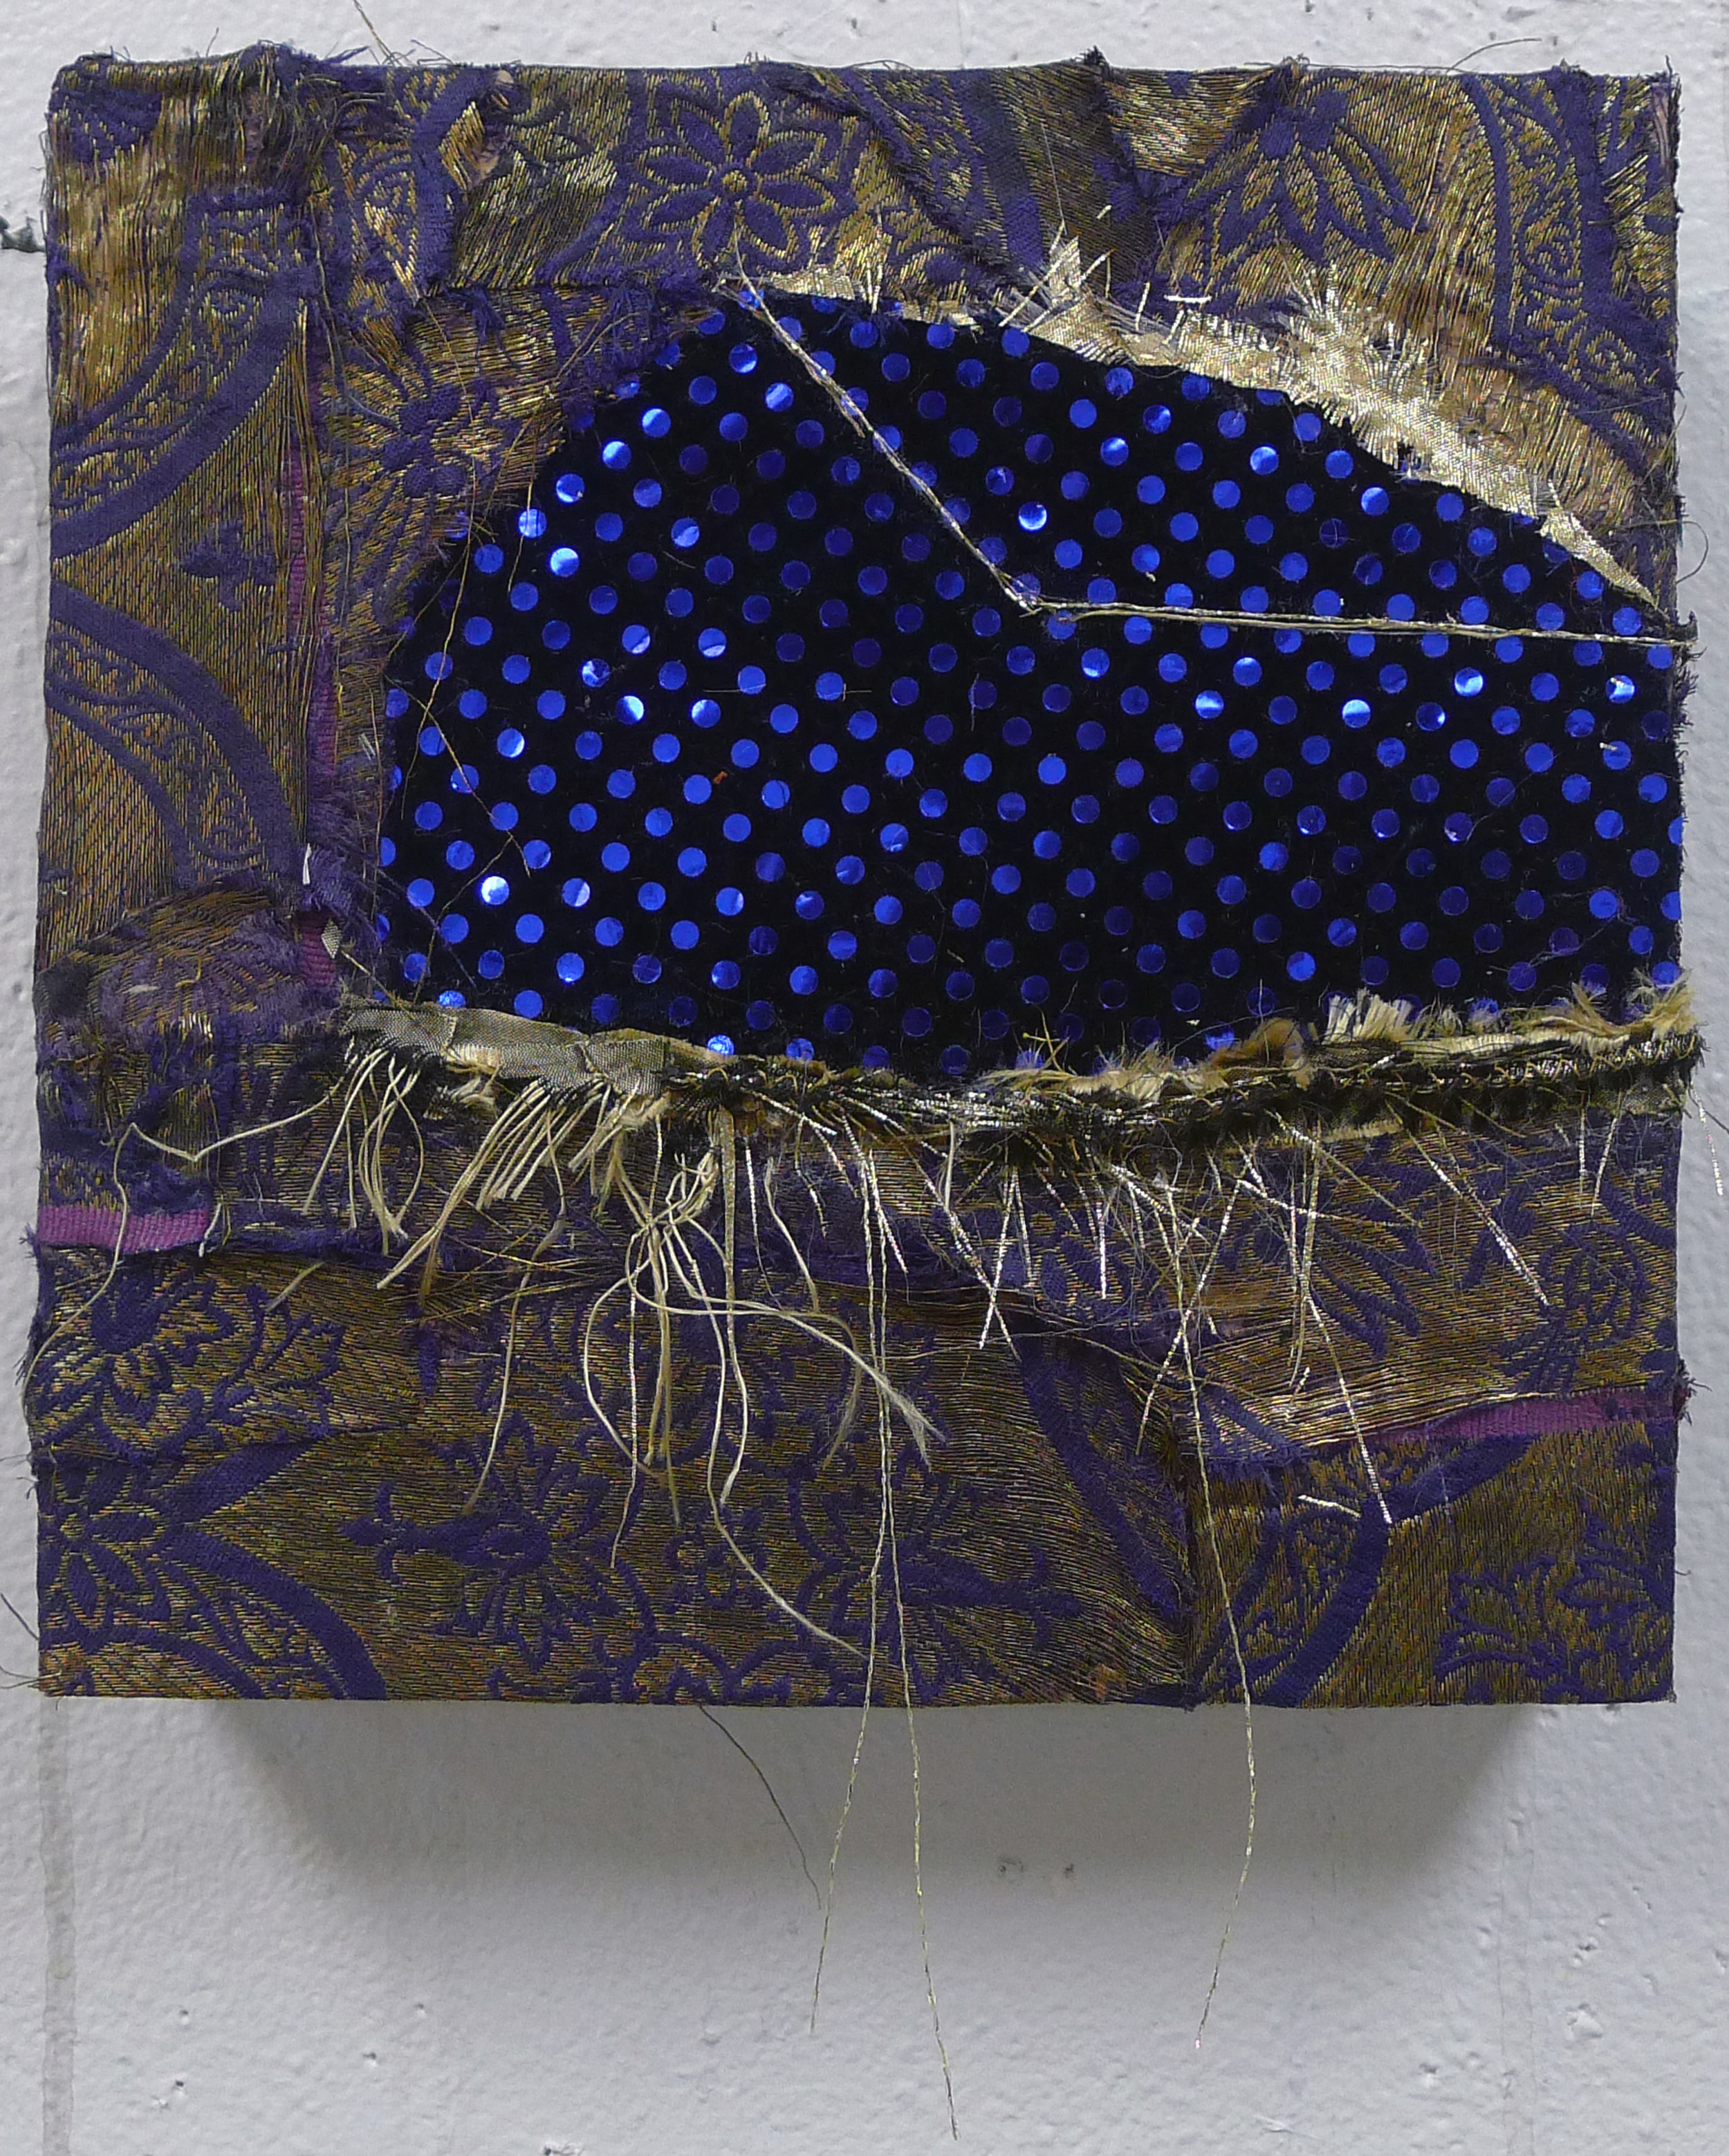  Brenda Cirioni,  Dream House: Midnight,&nbsp;&nbsp; Fabric and sequins, 8x8 